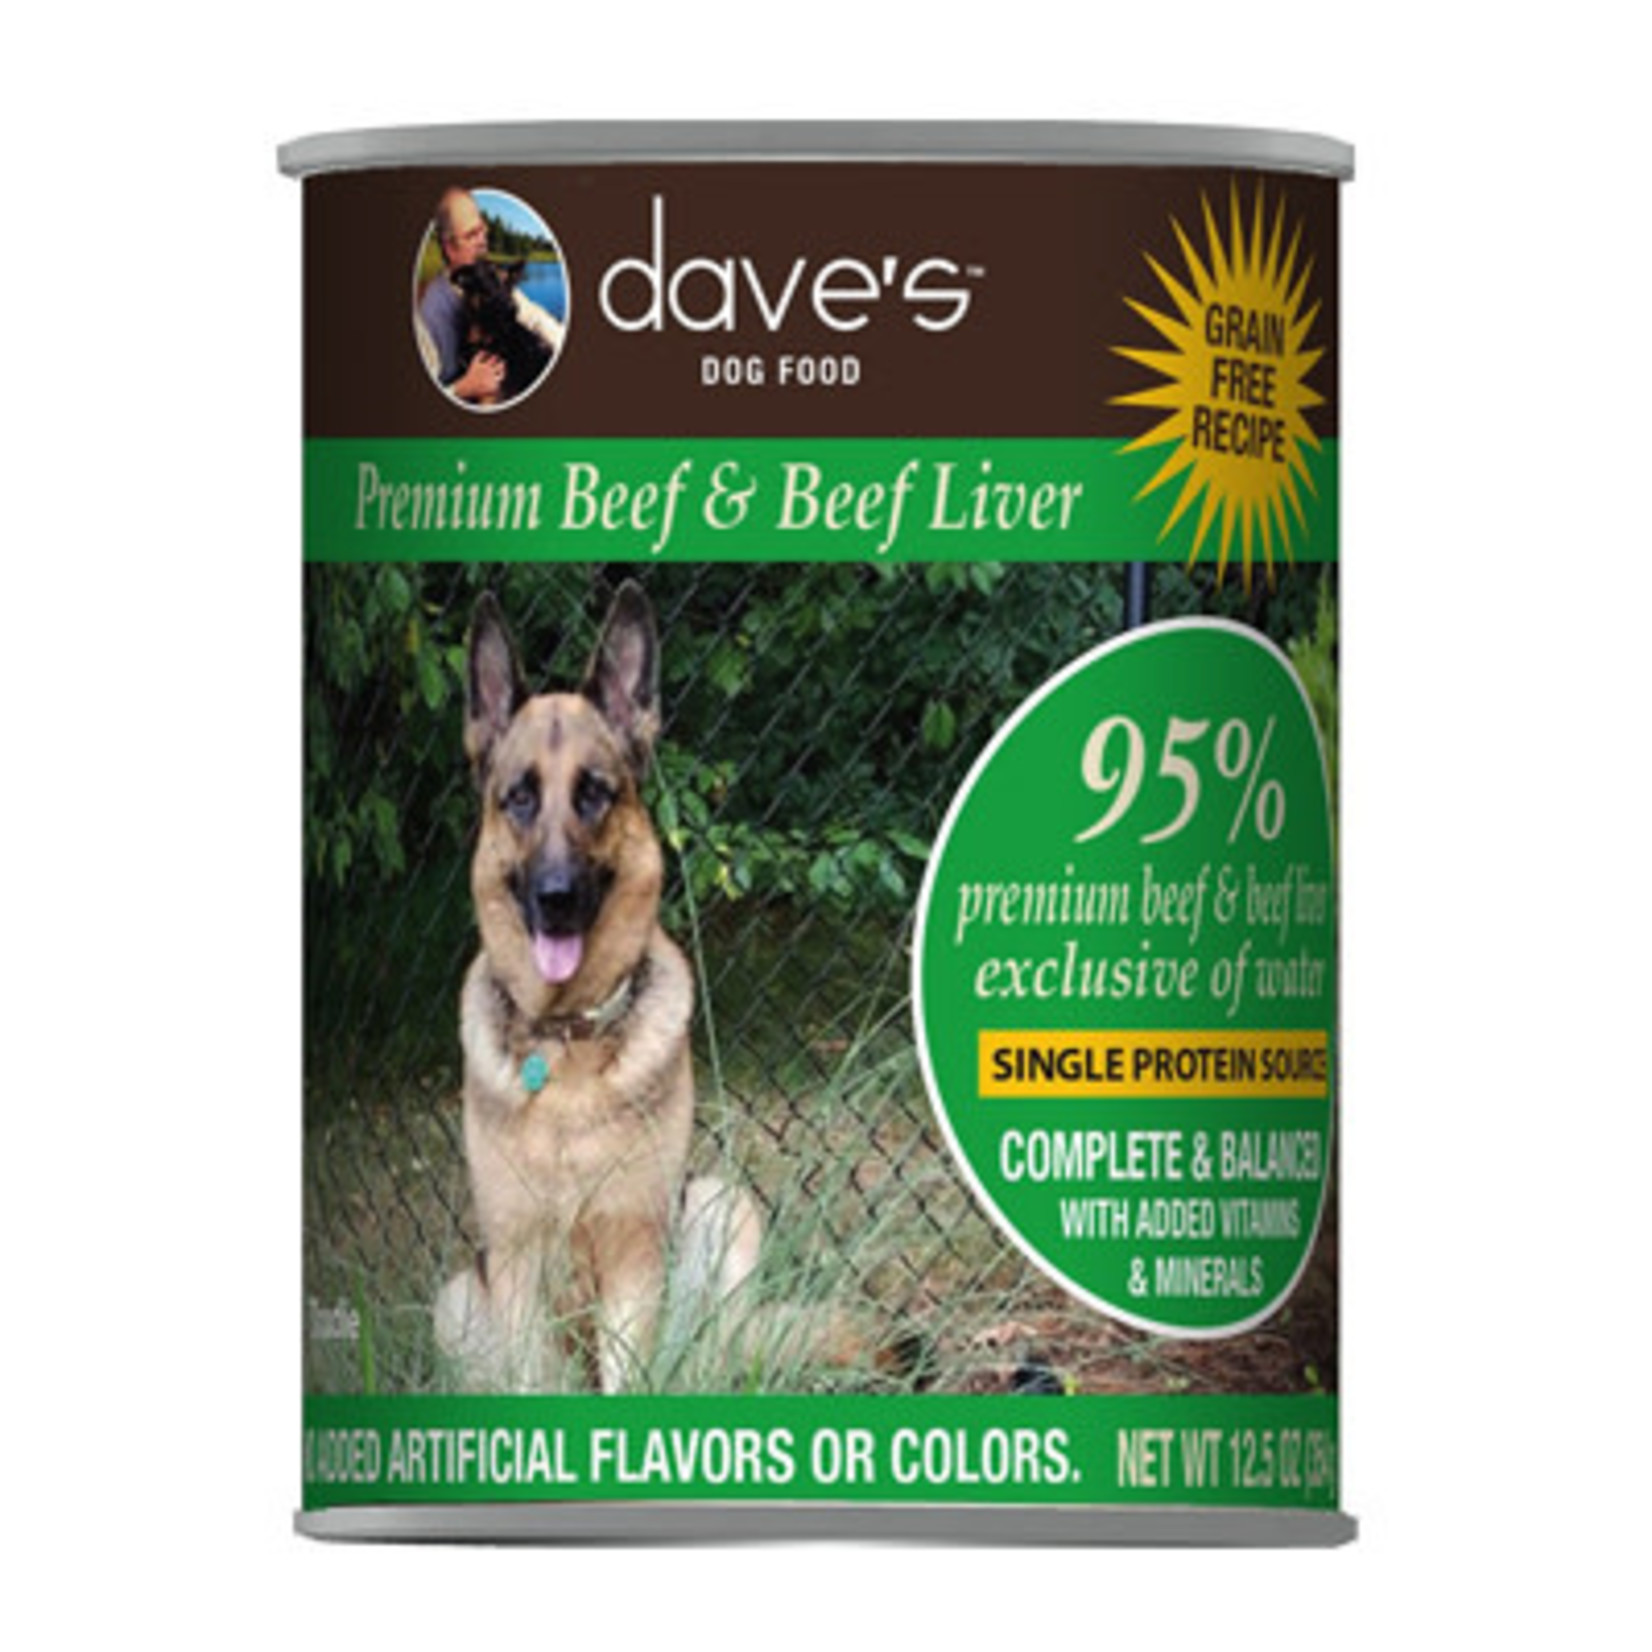 Dave's 95% Beef Dog 13oz Daves (dsc)